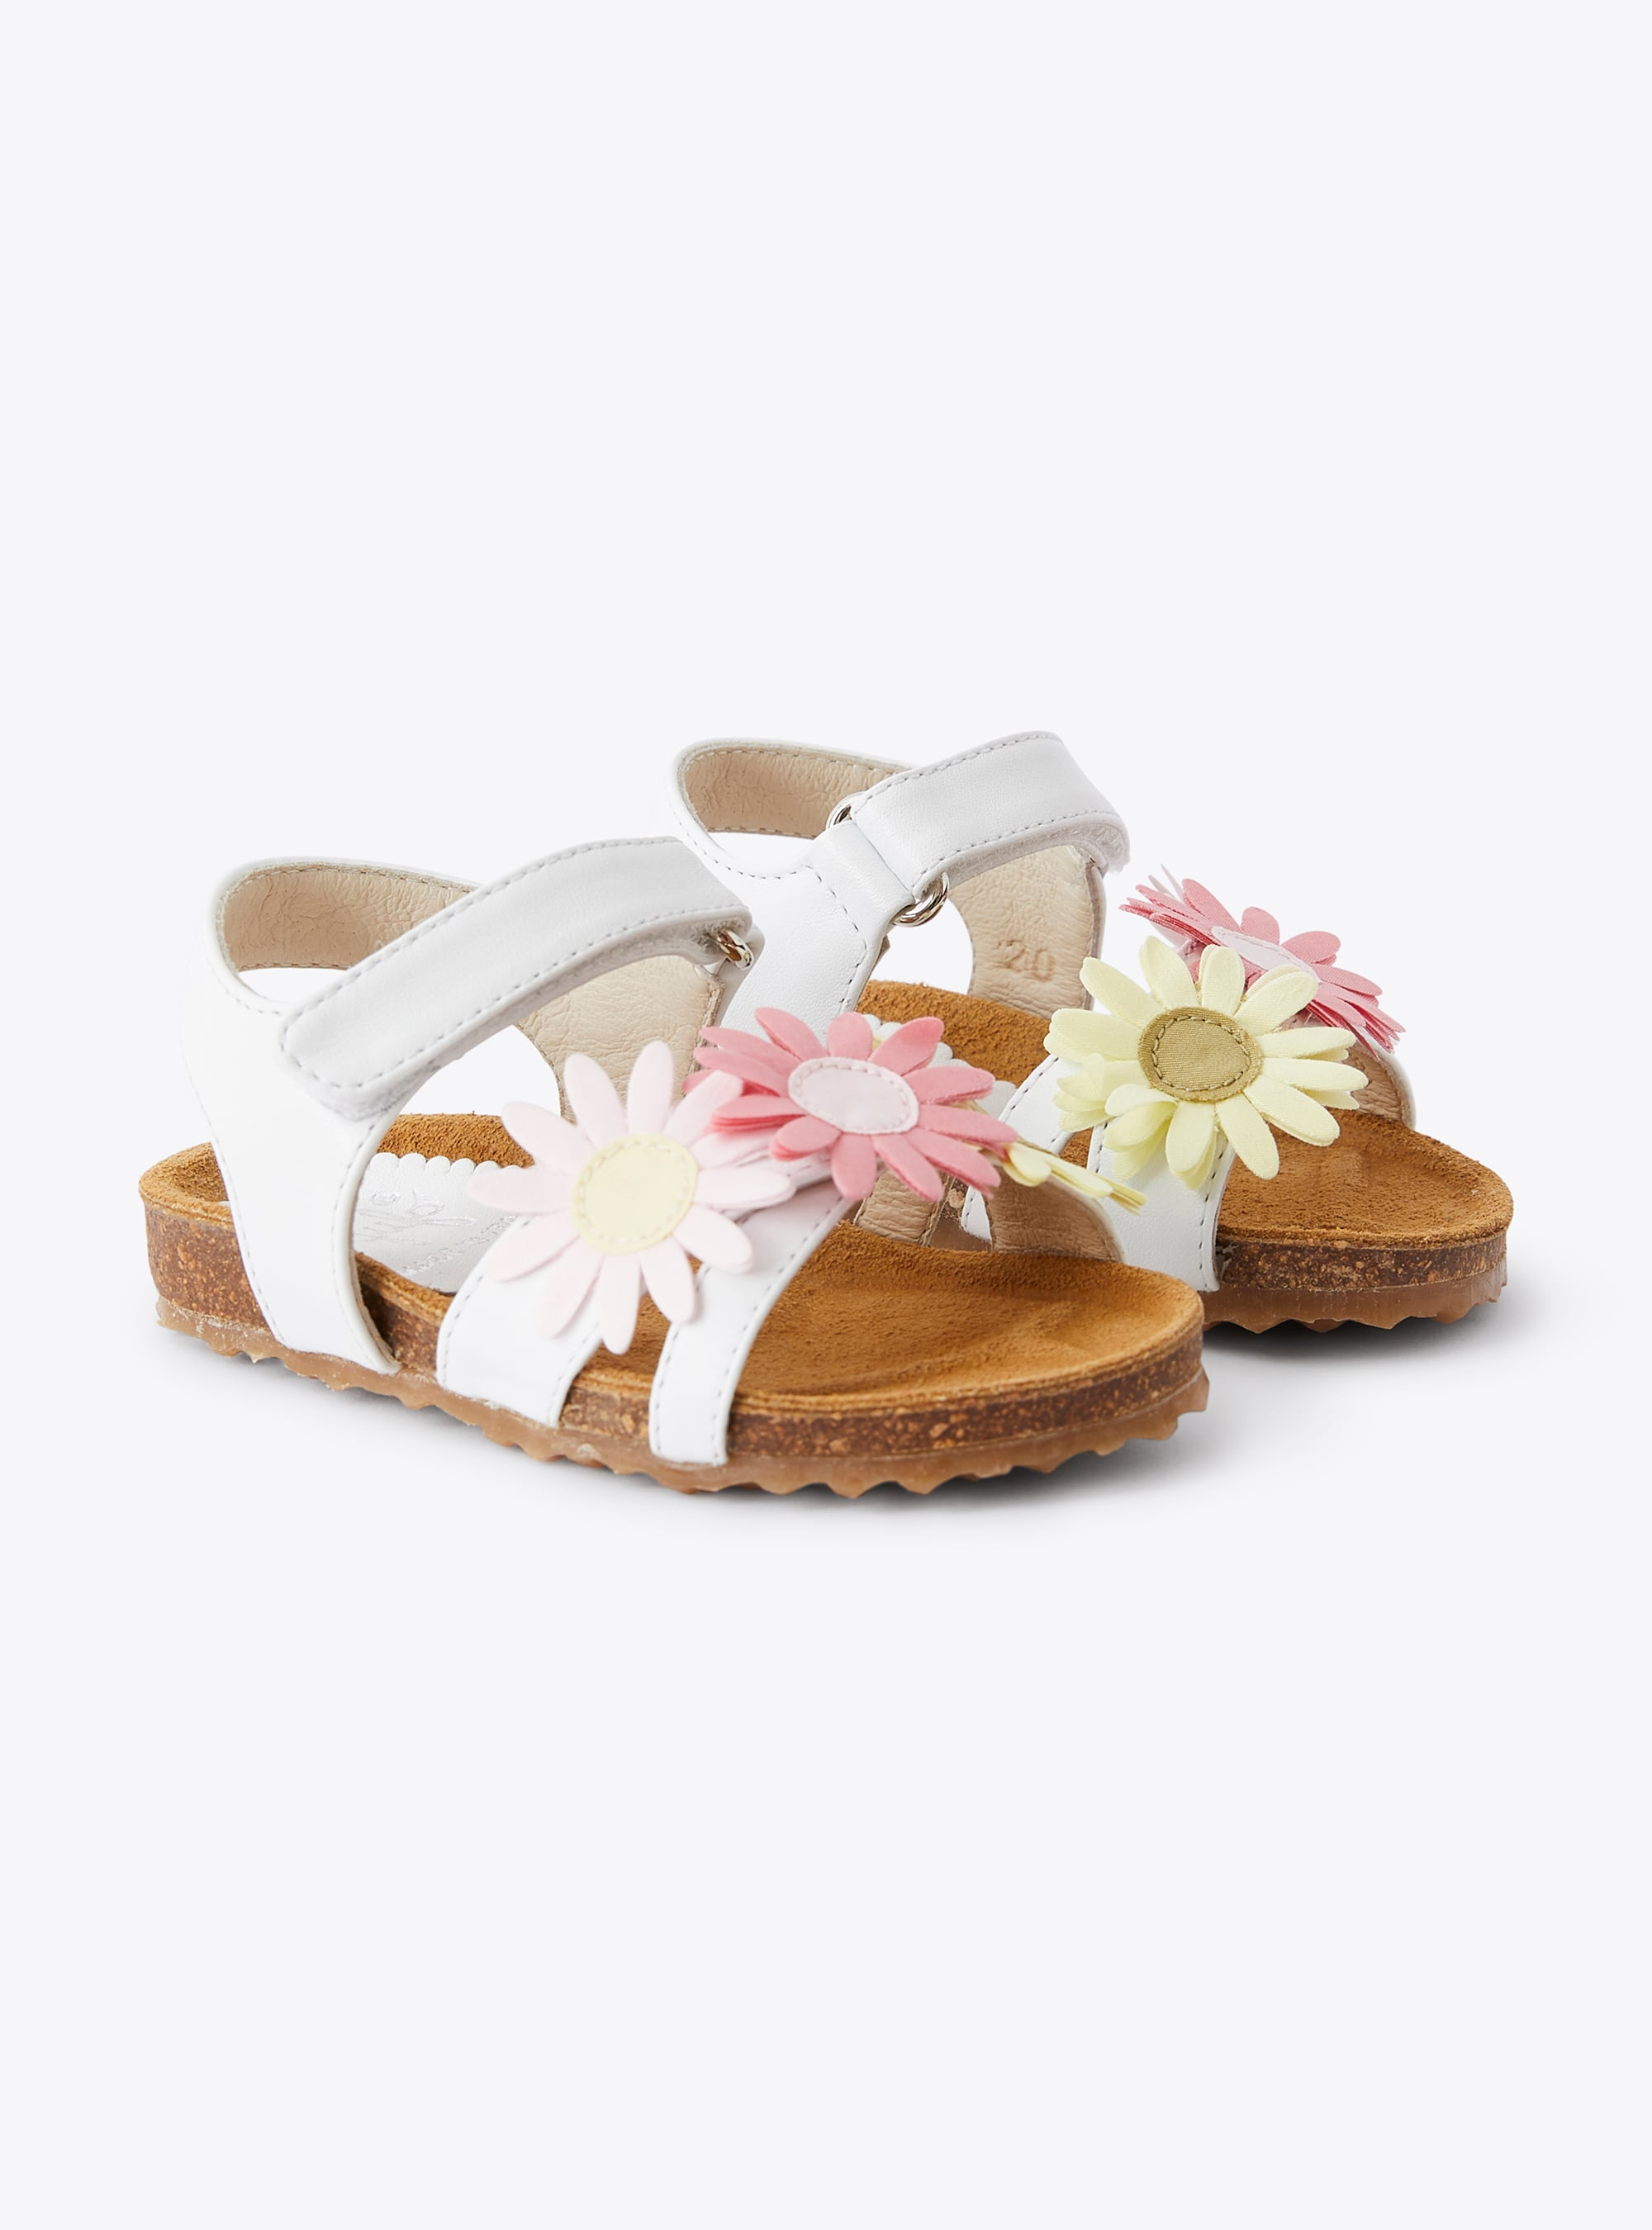 Ledersandalette mit Blumen - Schuhe - Il Gufo